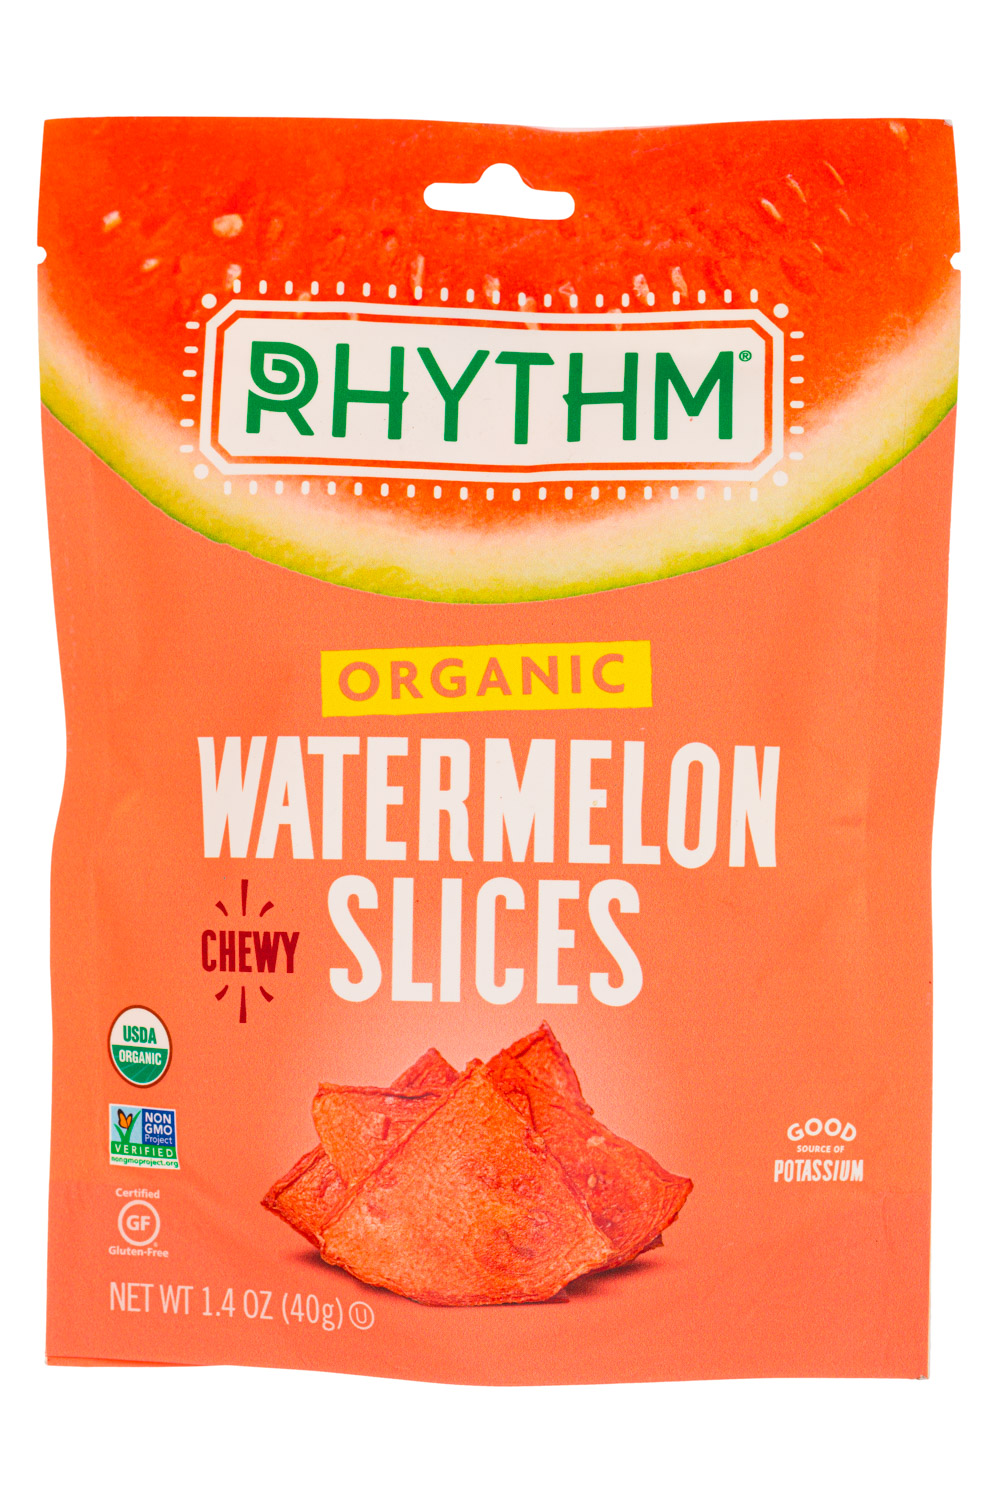 Watermelon Slices 2019